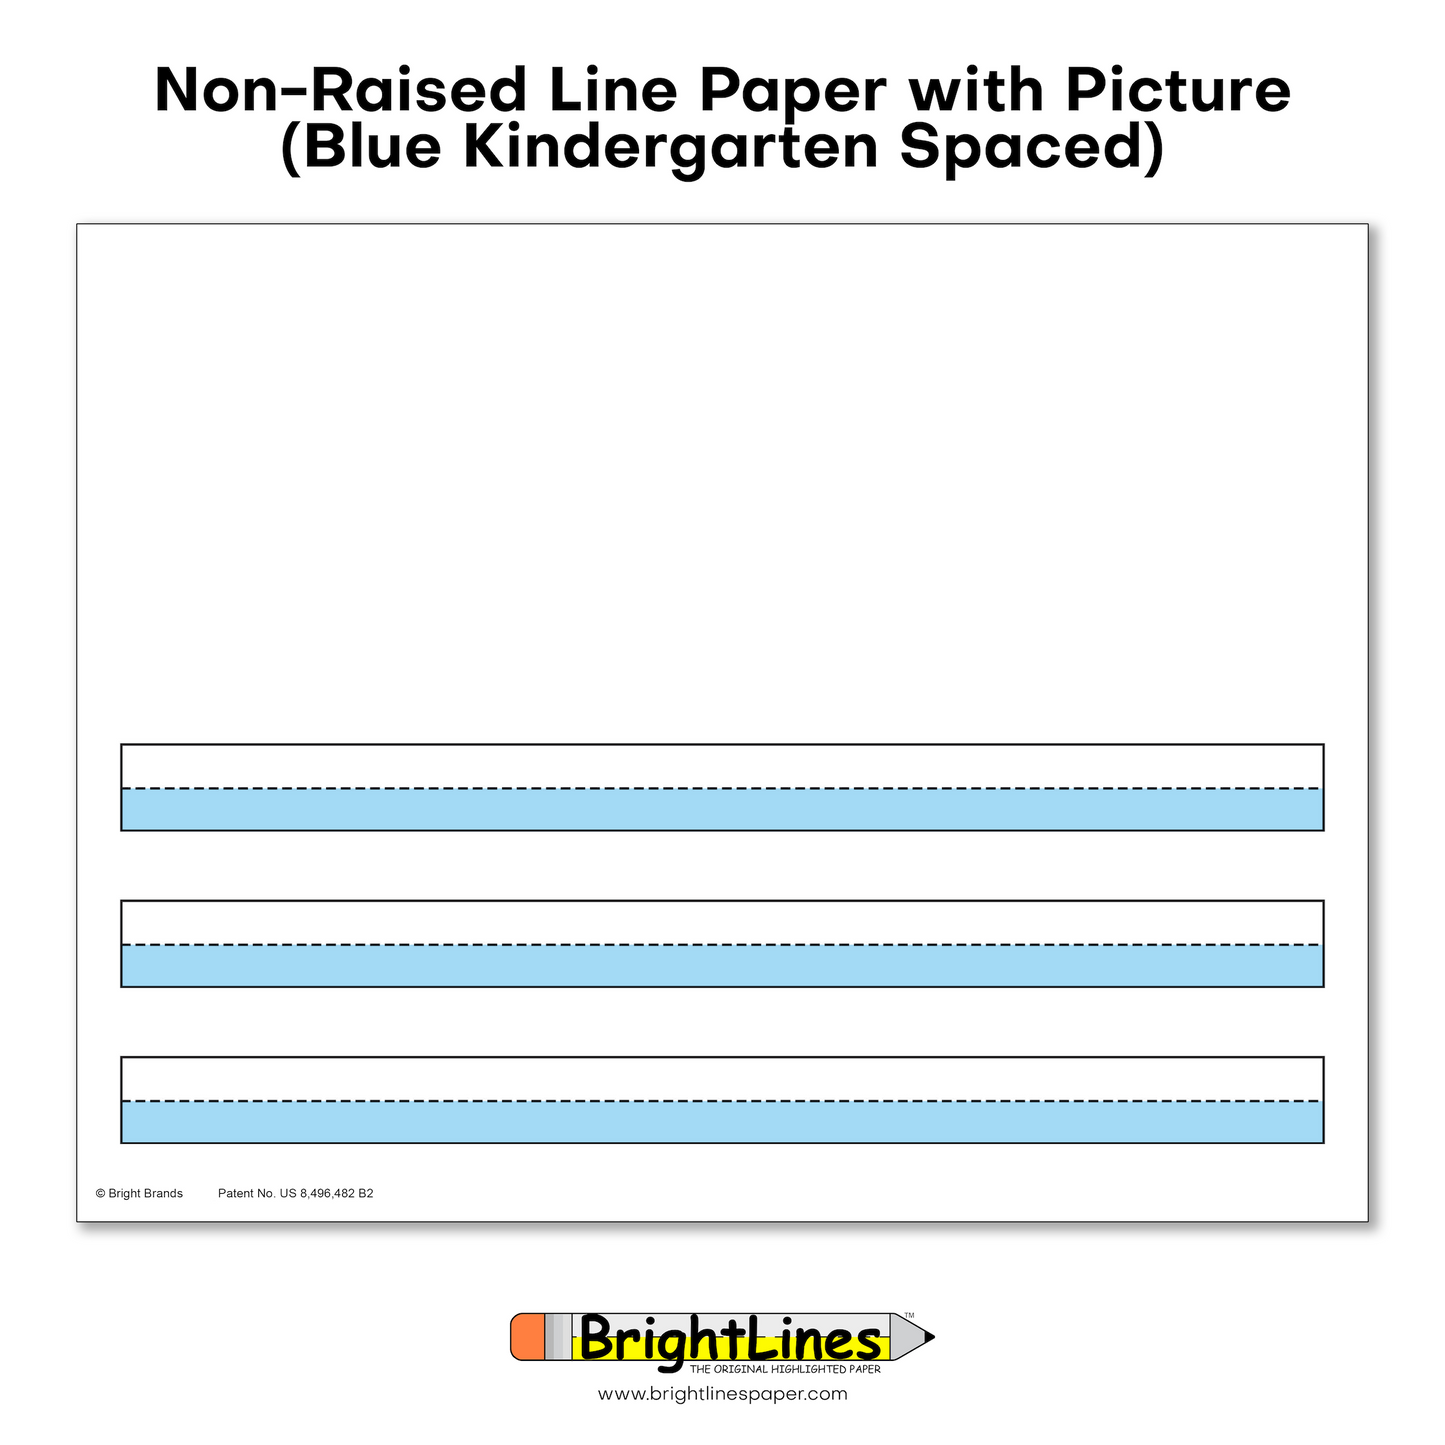 BrightLines - Wide Line Paper